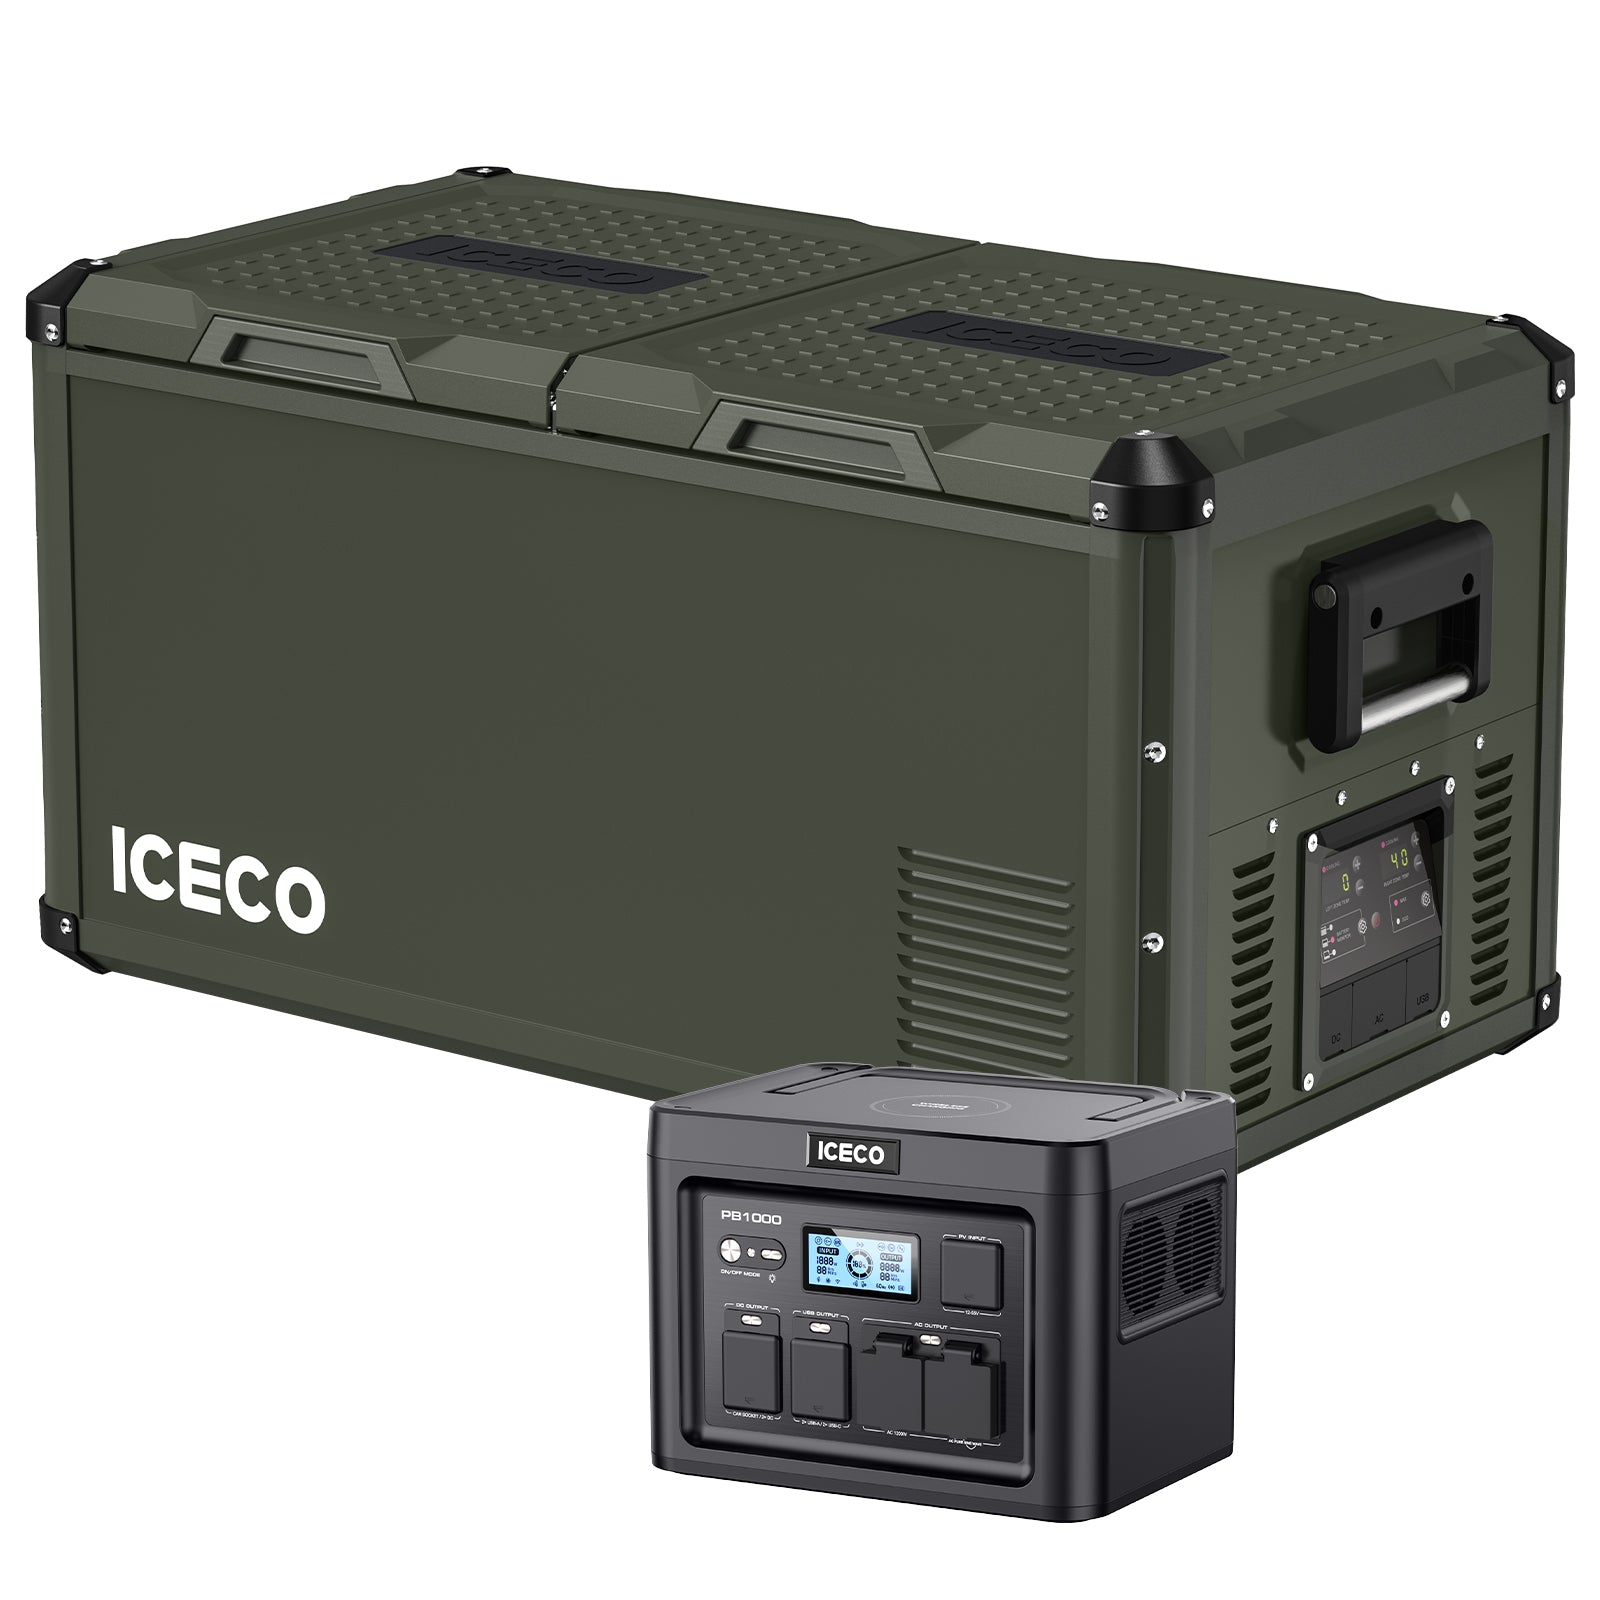 79.2QT VL75ProD 12V Robust Freezer With PB1000 Power Station | ICECO-Portable Fridge-www.icecofreezer.com